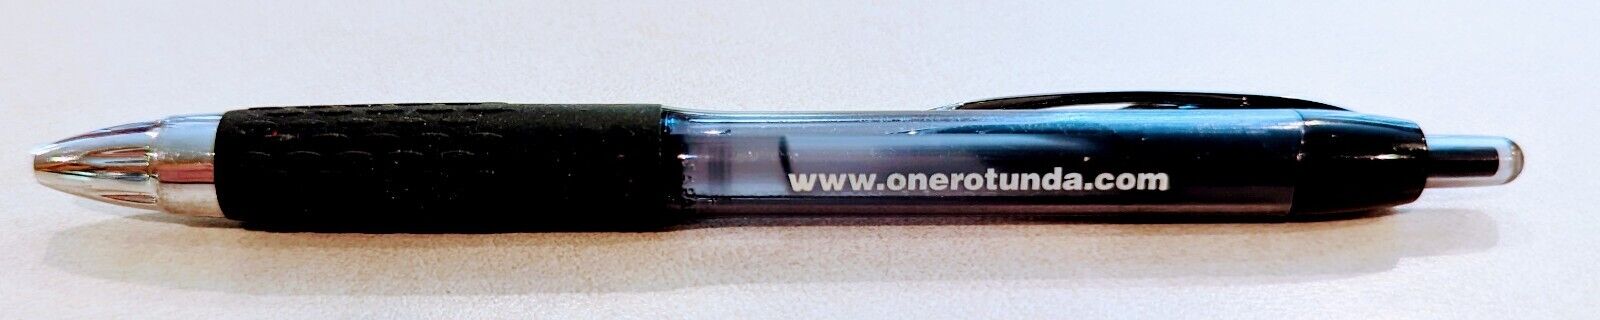 Collector Ink Pen Ford Motor Company - onerotunda.com Ford Dearborn SVT